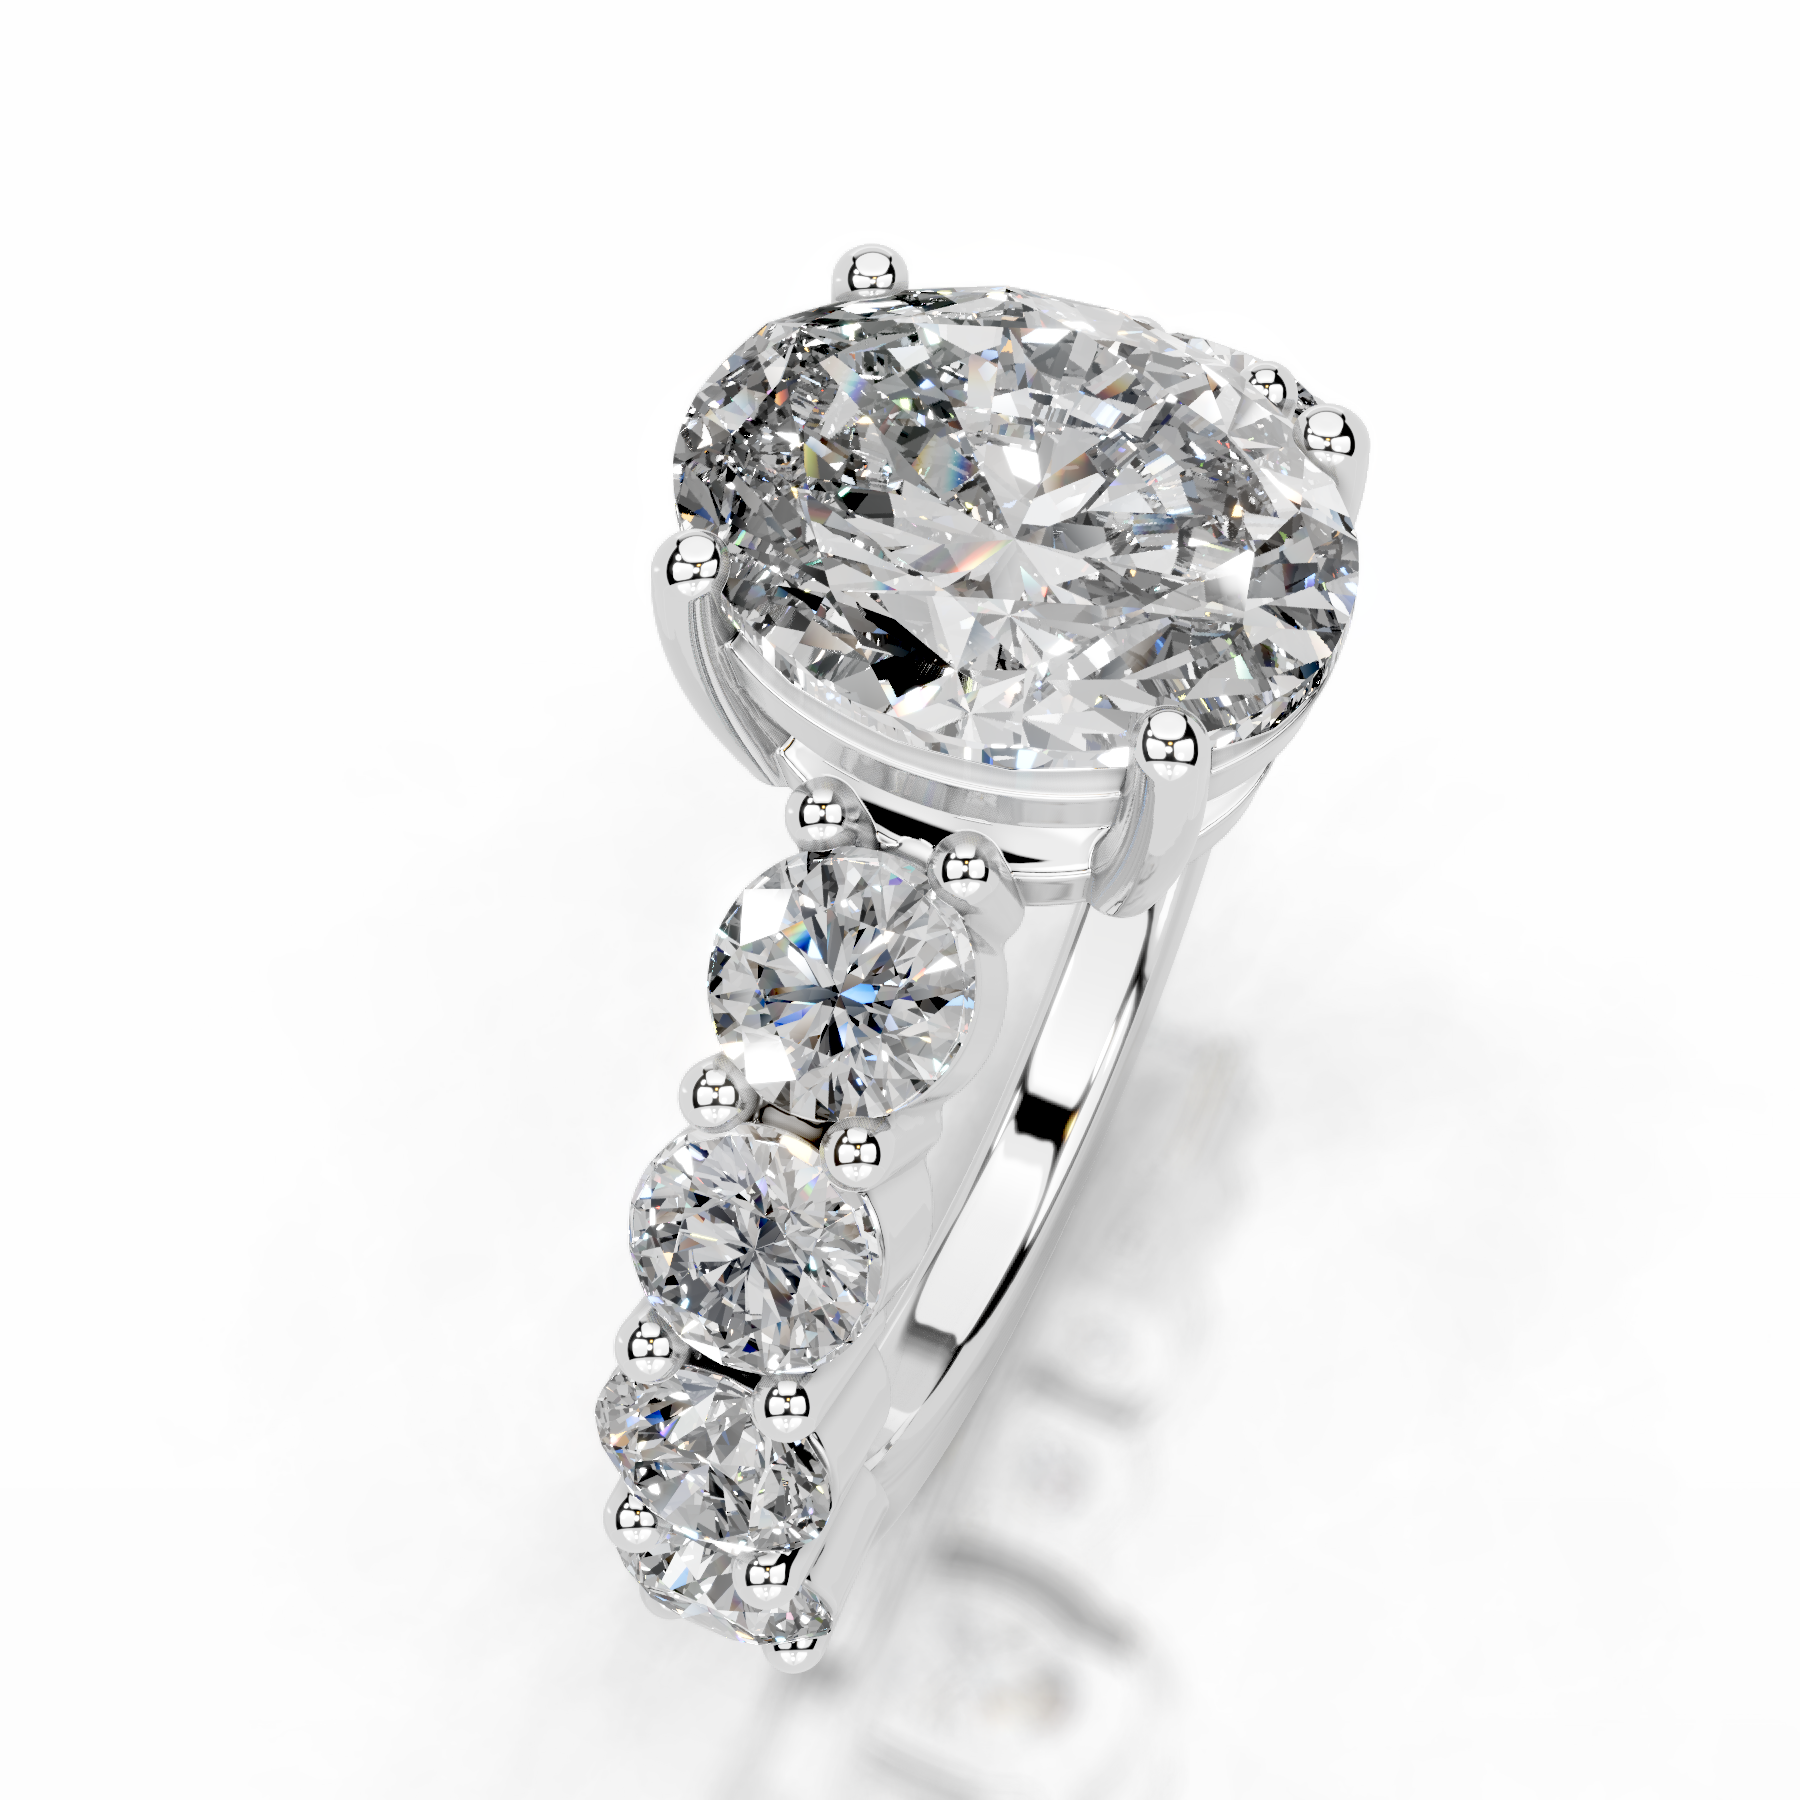 Odin Diamond Engagement Ring   (4 Carat) -Platinum